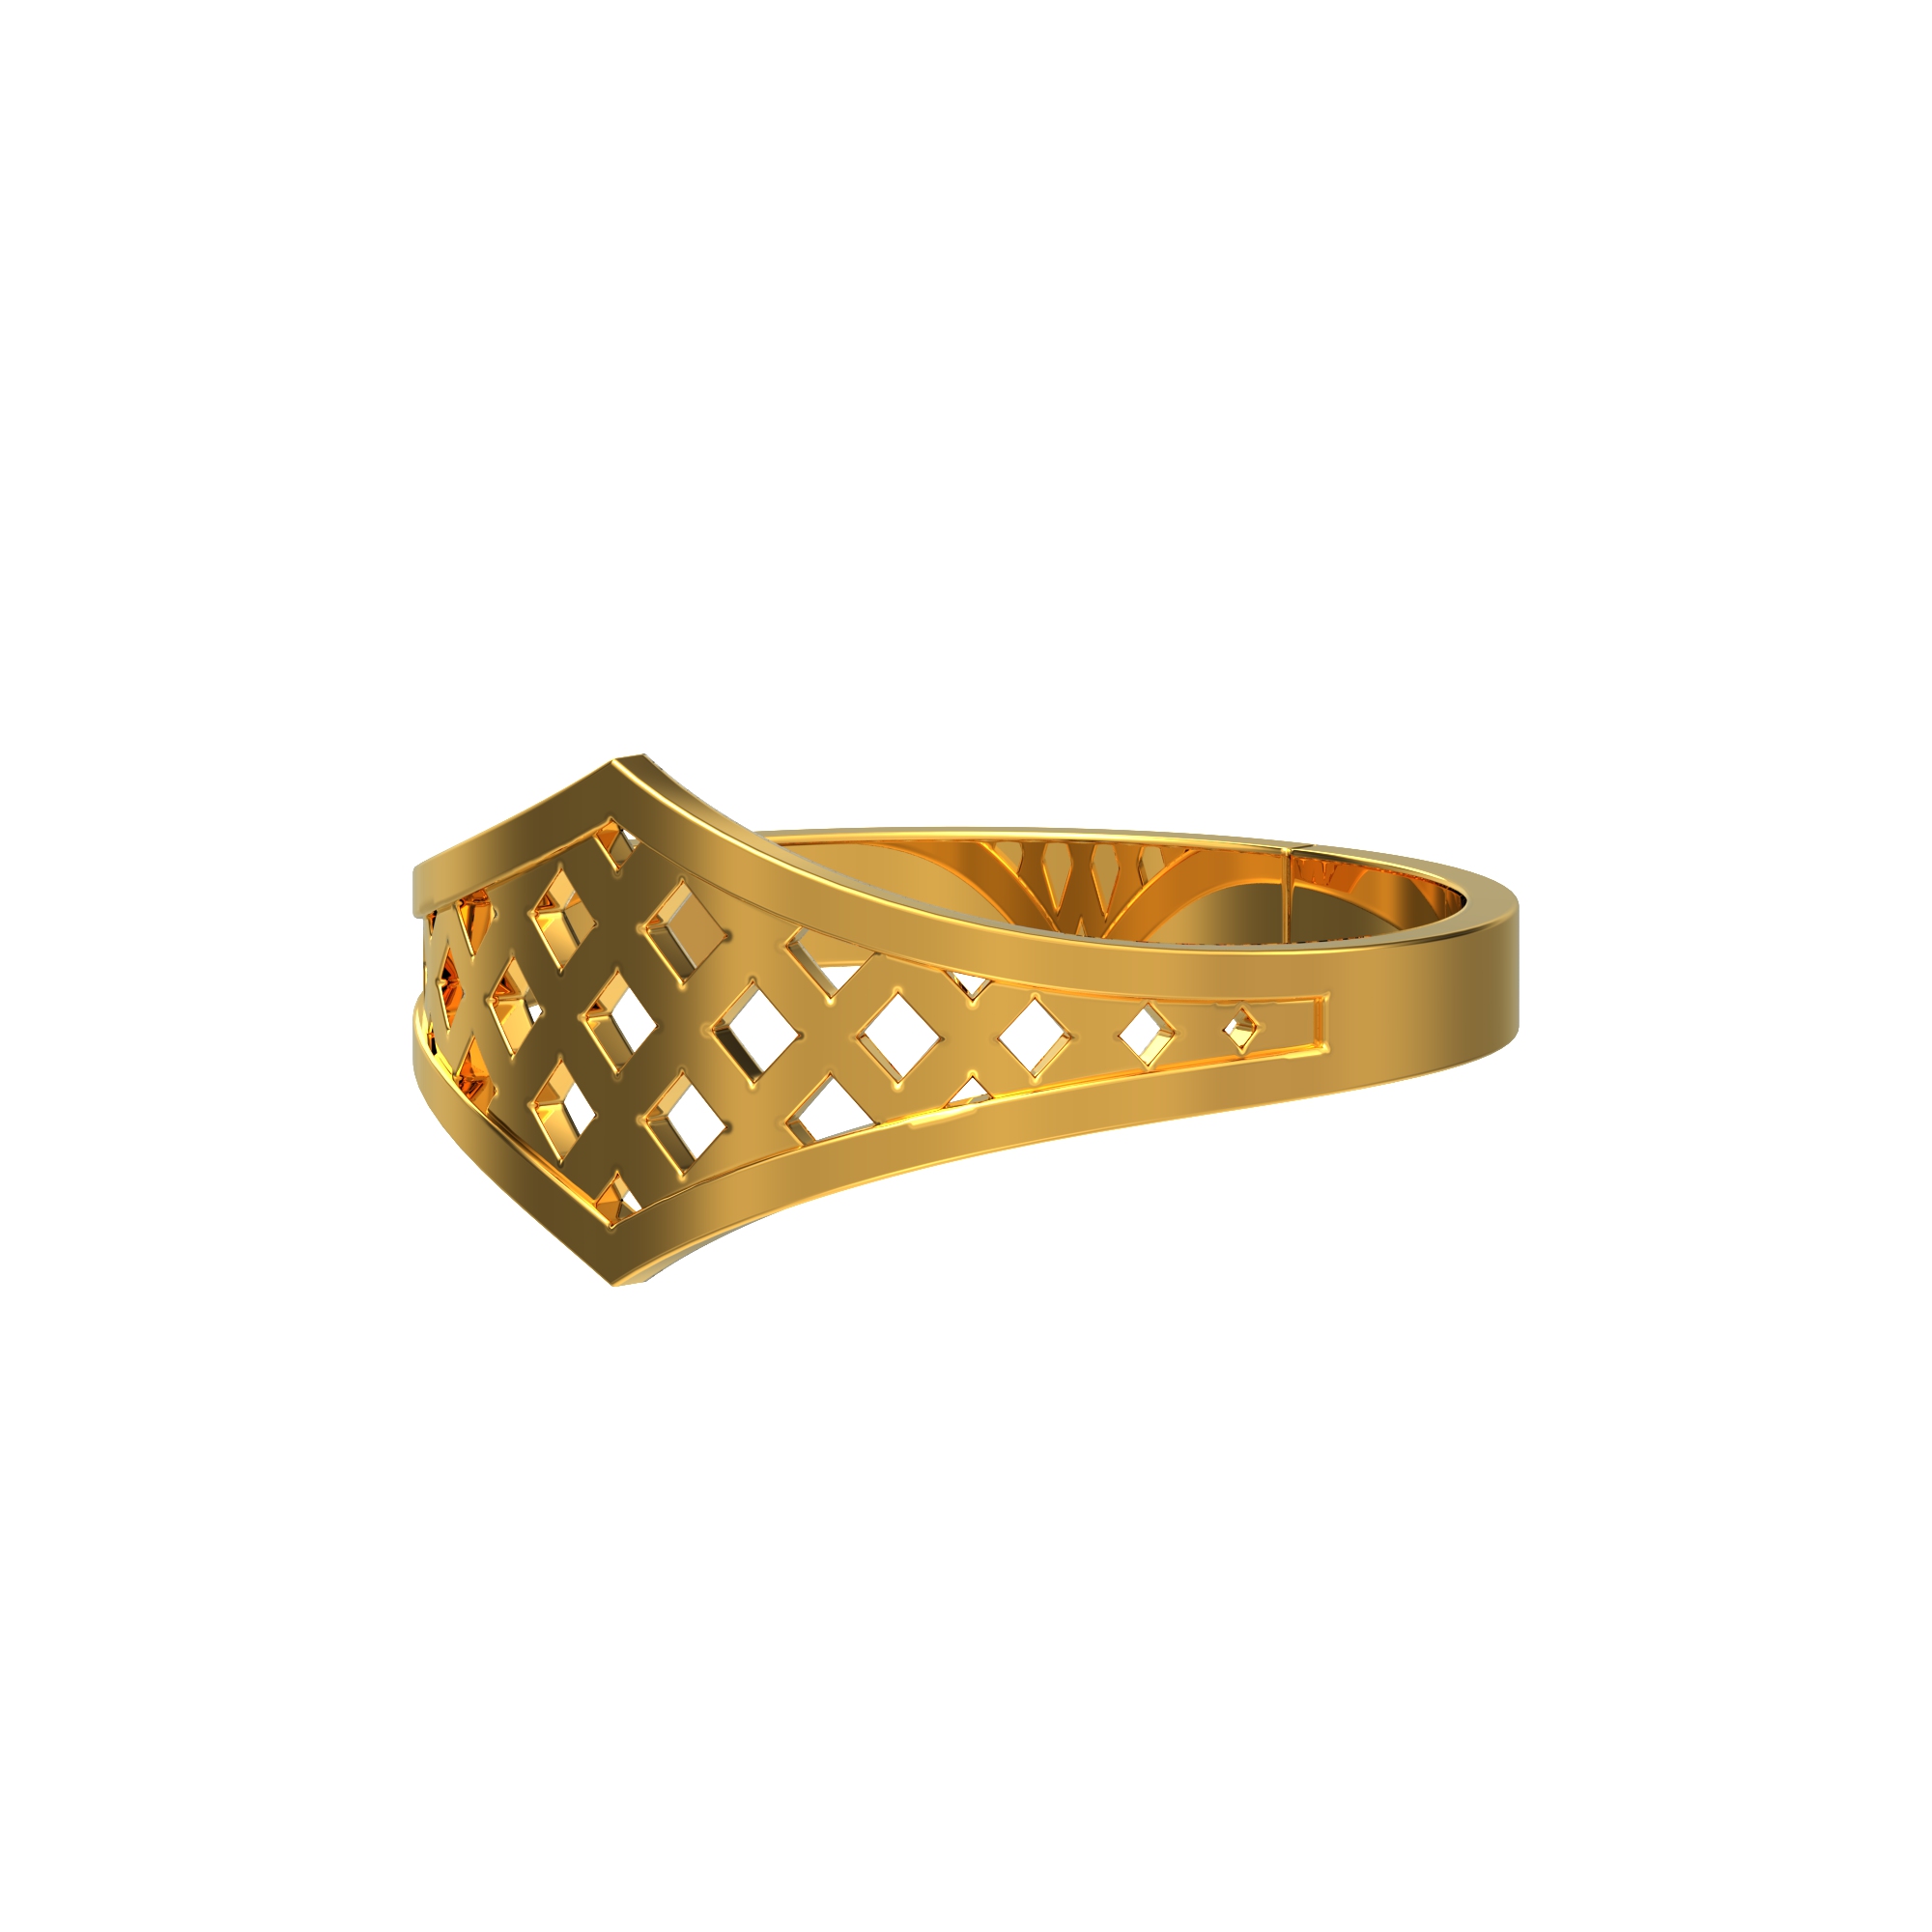 Infinity Gold Ring Design Poonamallee